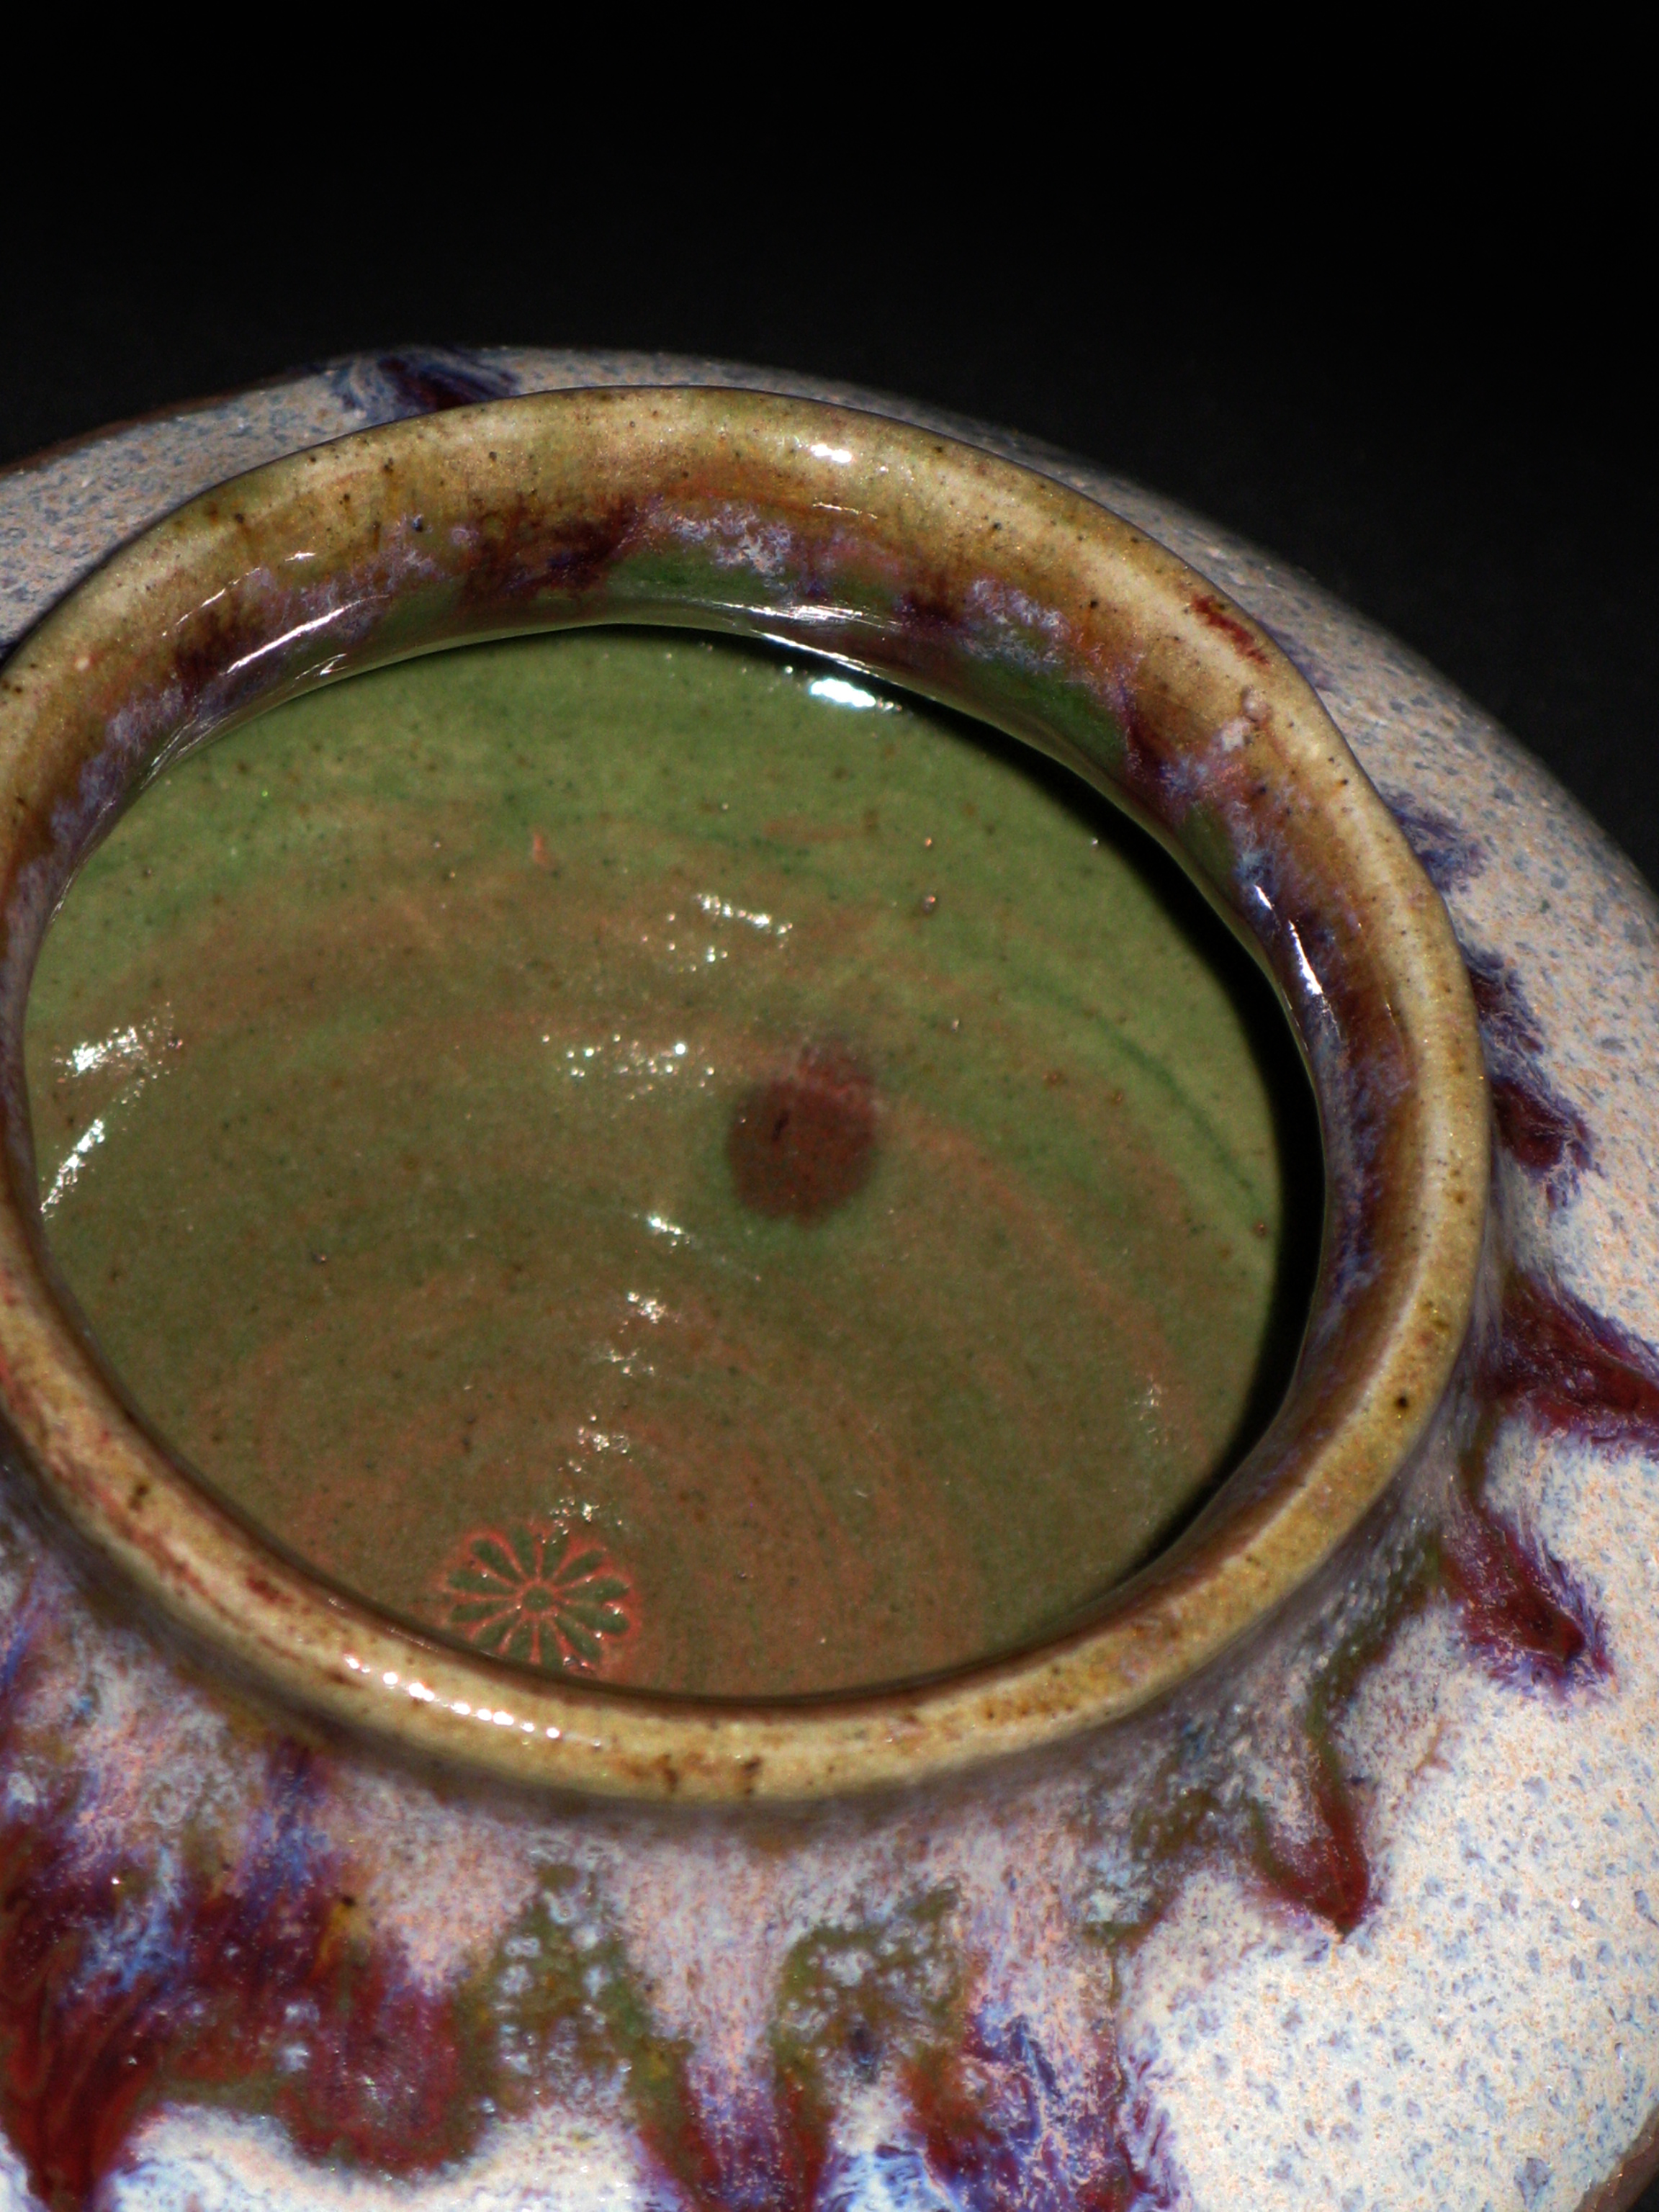 Ovelia Transtoto - 'Small glazed pot' #2